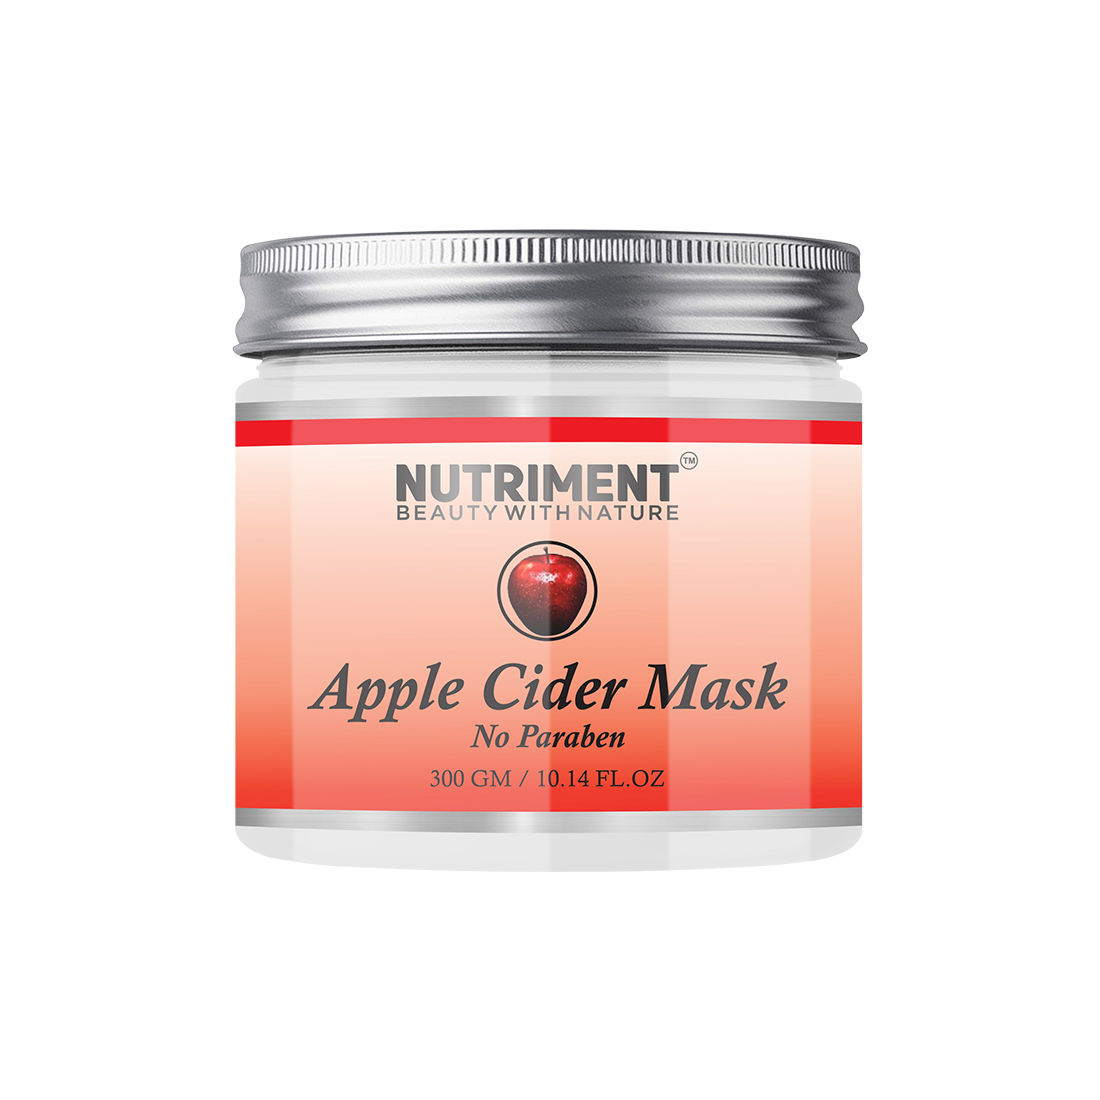 Nutriment Applecidar Mask For Hydrating Skin Removing Oil And Improves